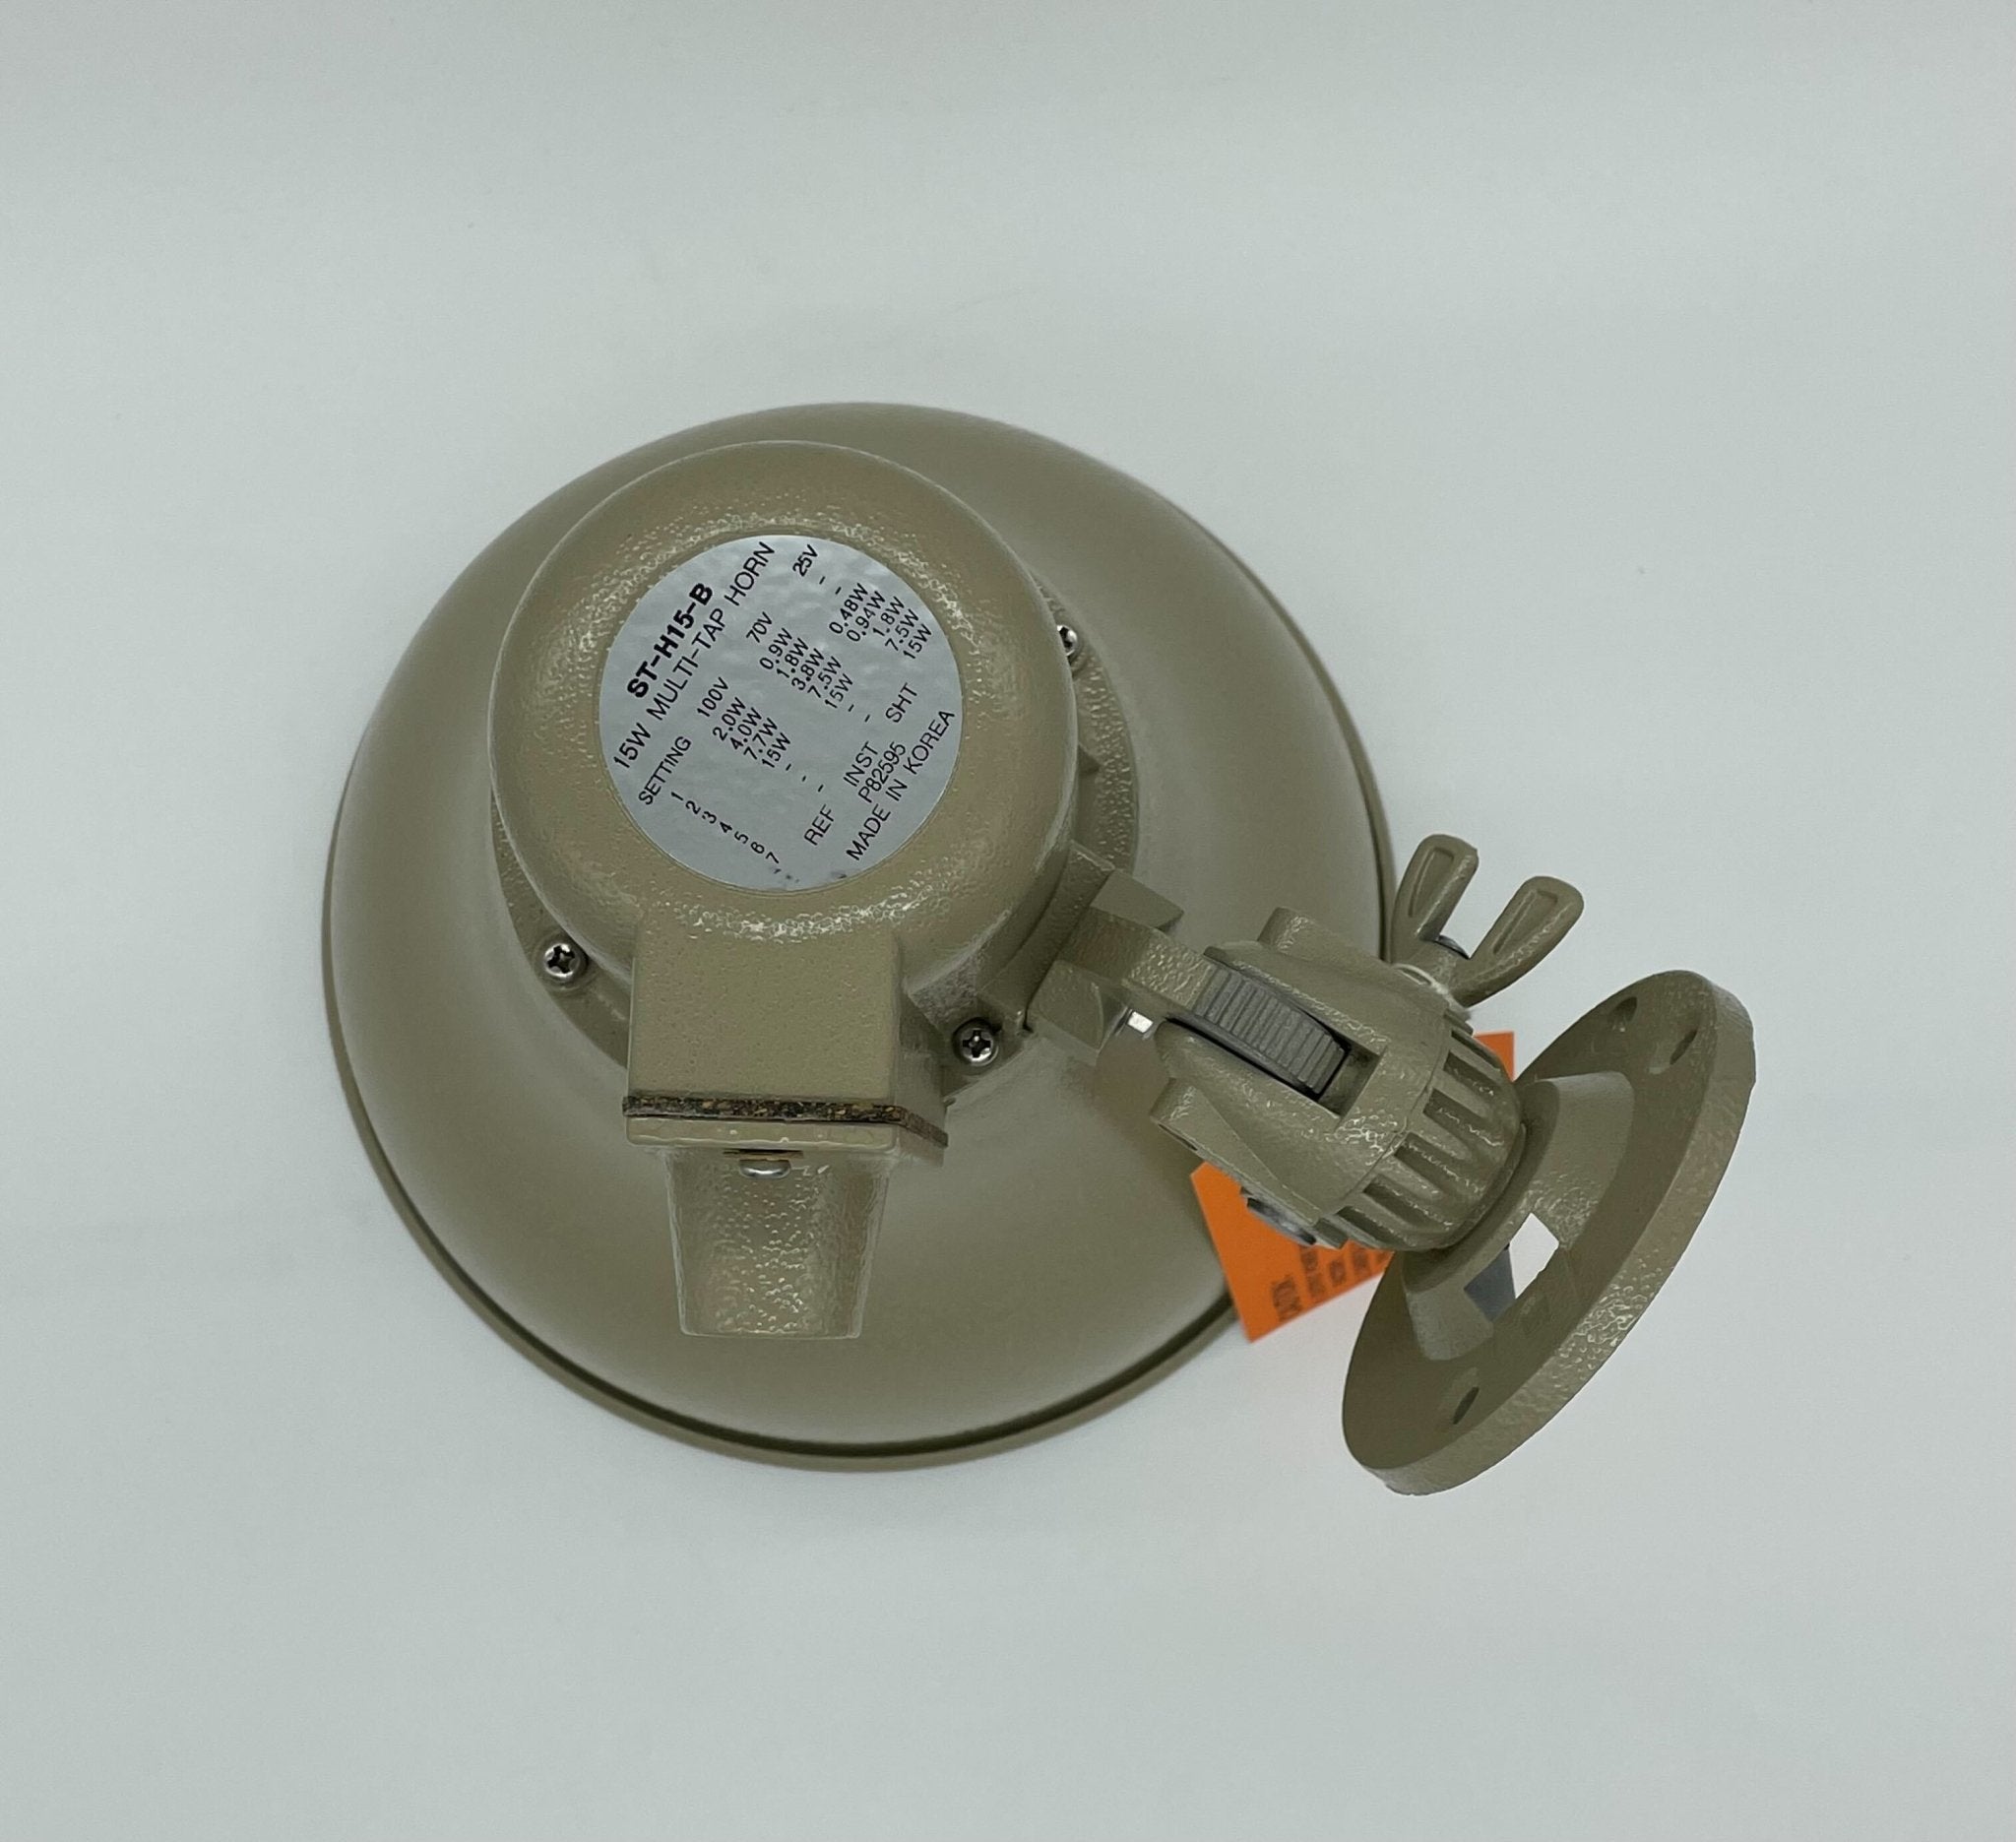 Wheelock ST-H15-B - The Fire Alarm Supplier